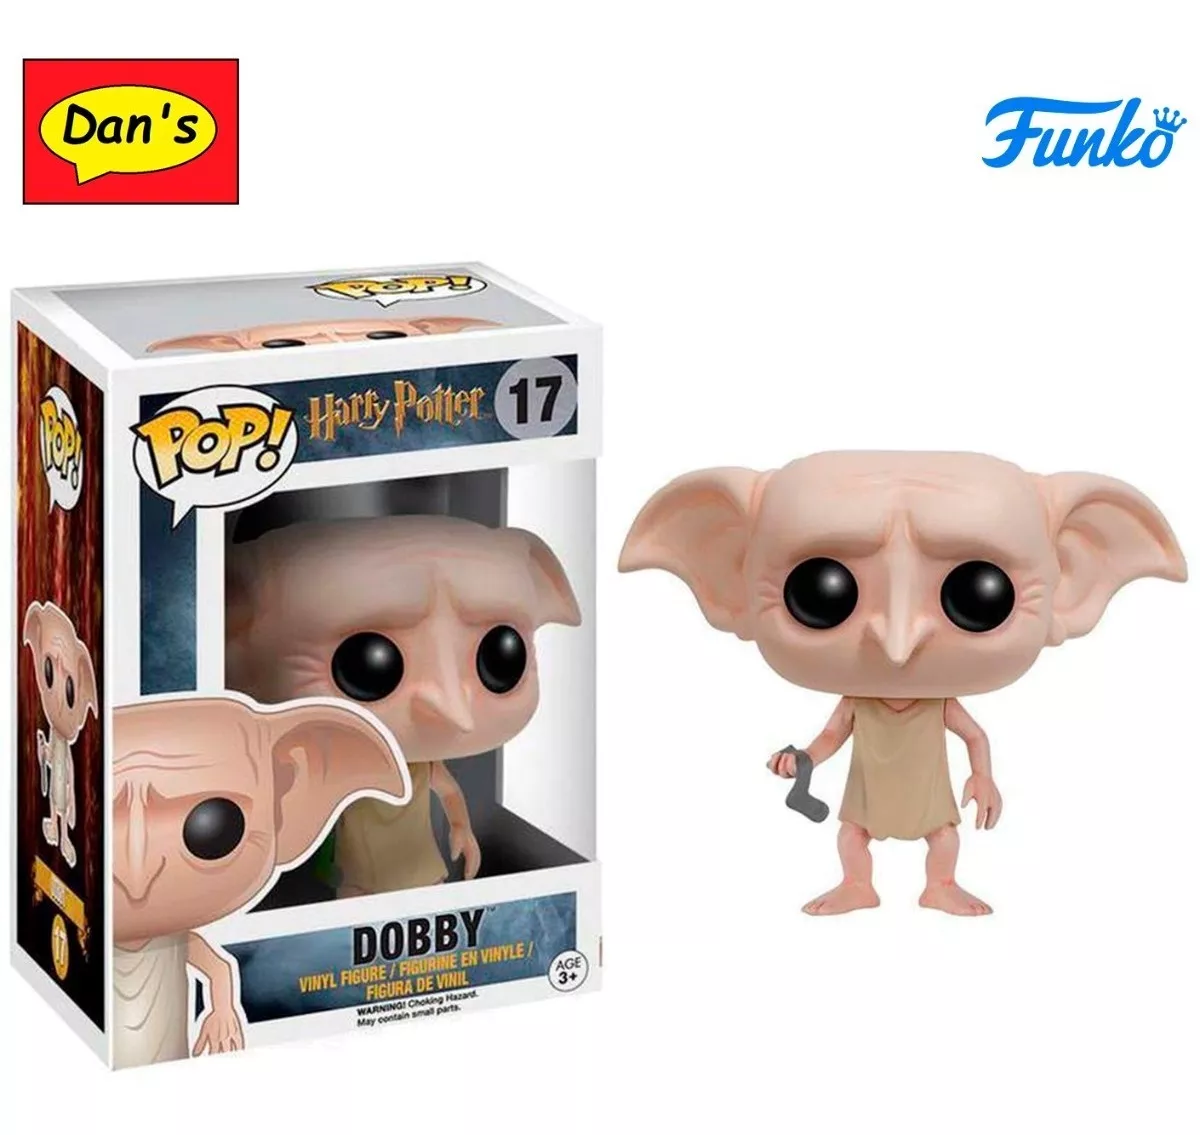 Funko Pop! Dobby 17 Harry Potter